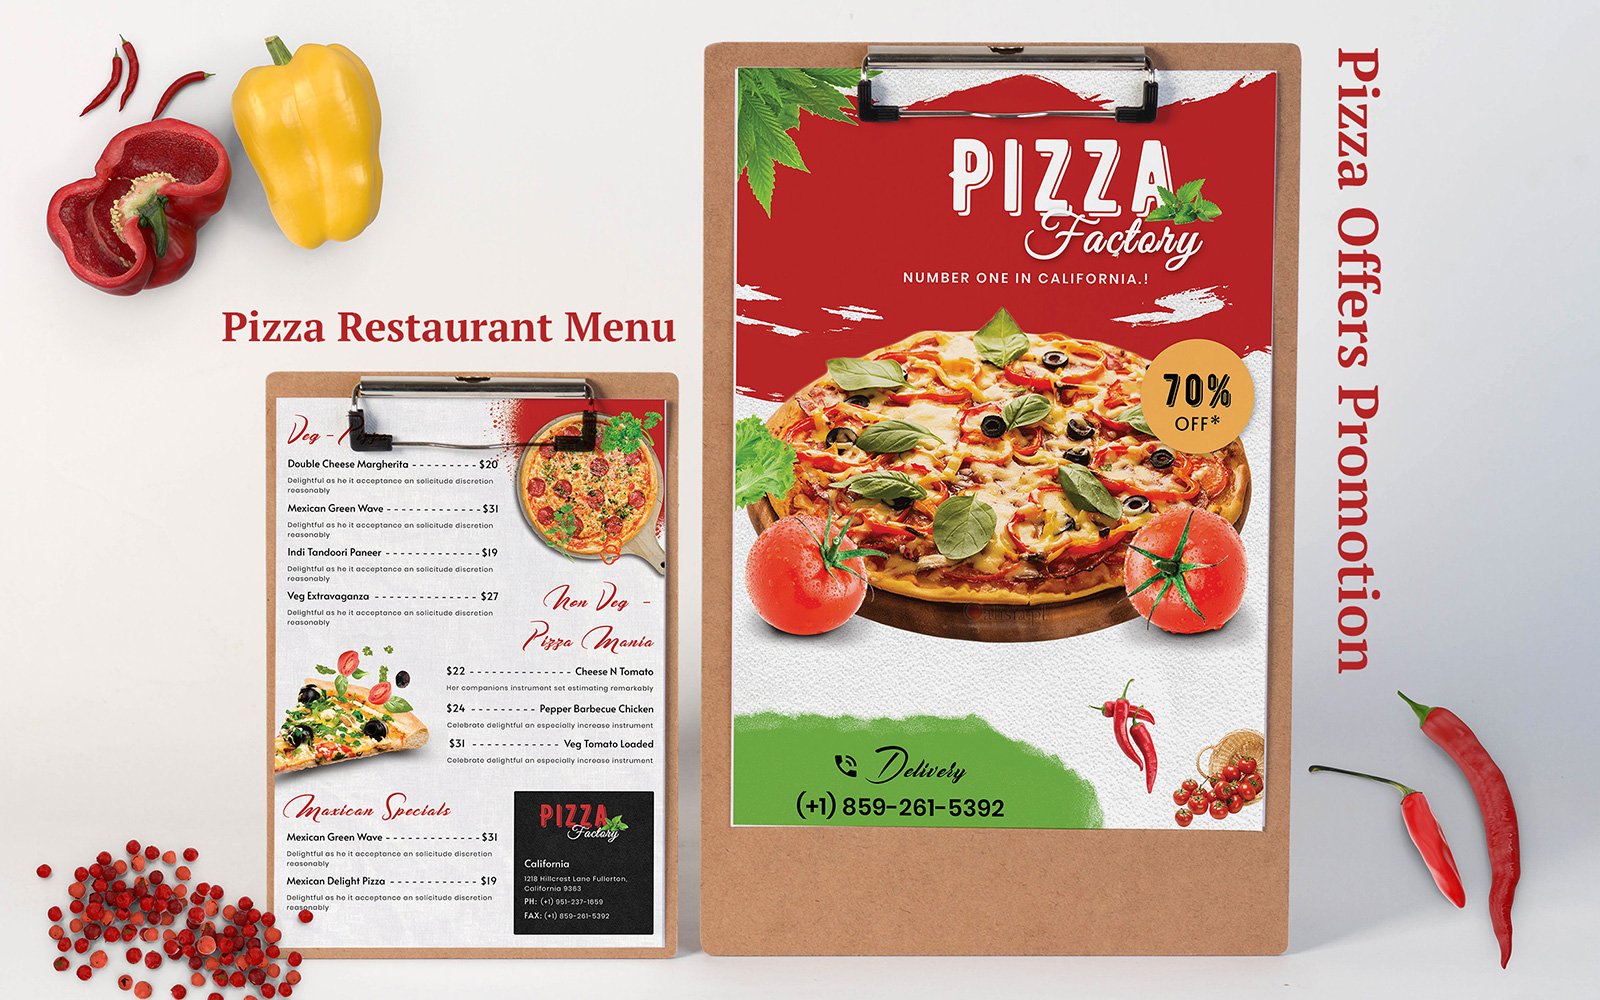 Pizza Restaurant Menu - Corporate Identity Template